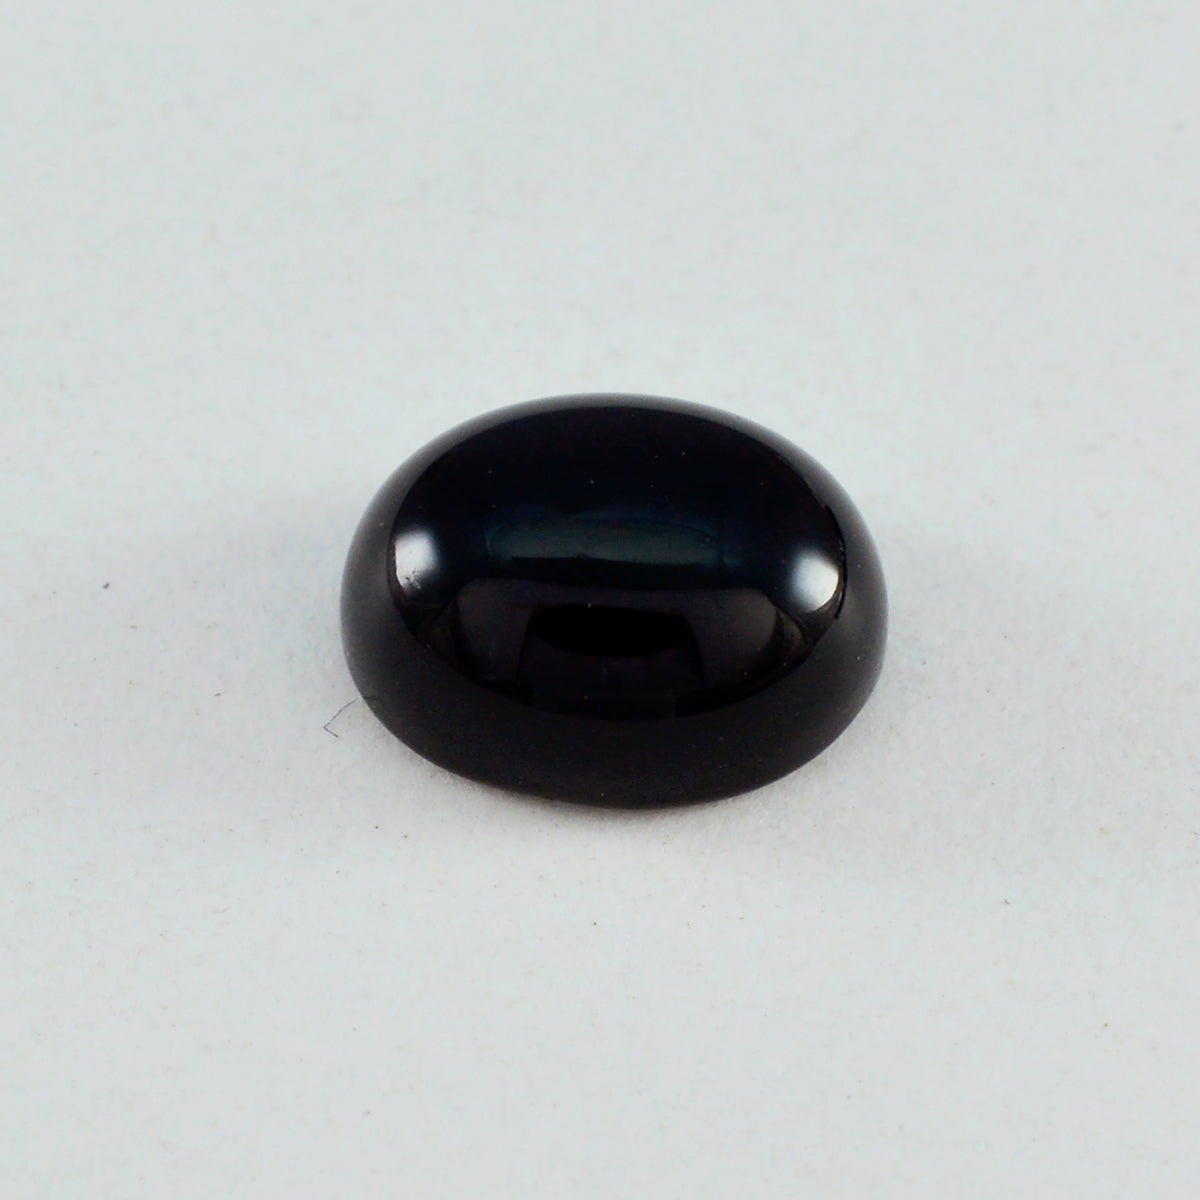 Riyogems 1PC Black Onyx Cabochon 9X11 mm ovale vorm knappe kwaliteit losse edelsteen